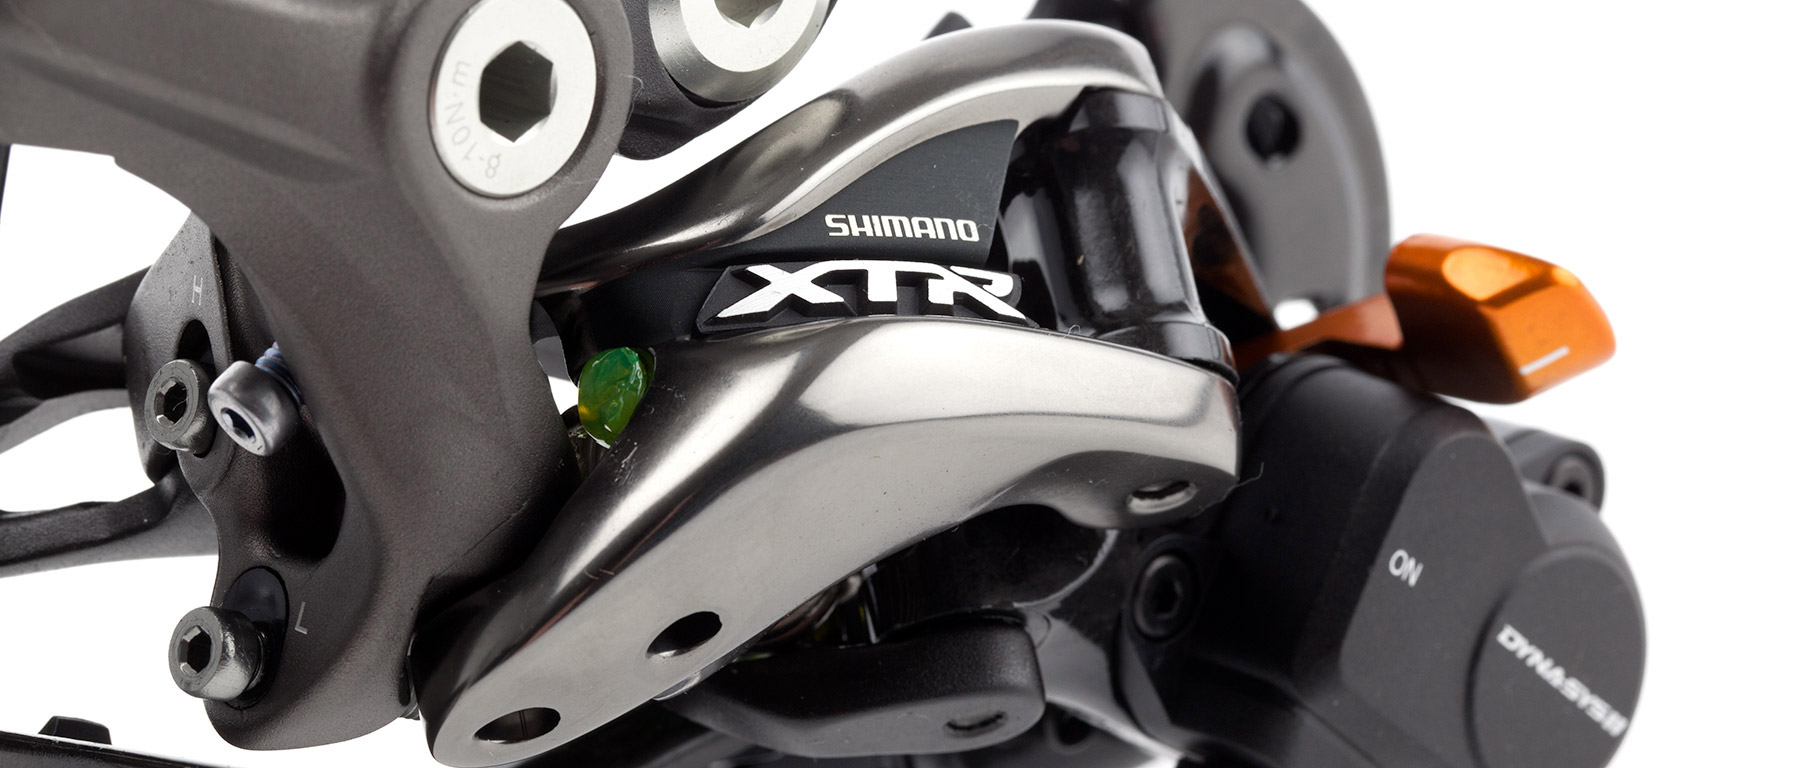 Shimano XTR RD-M9000 11-Speed Rear Derailleur